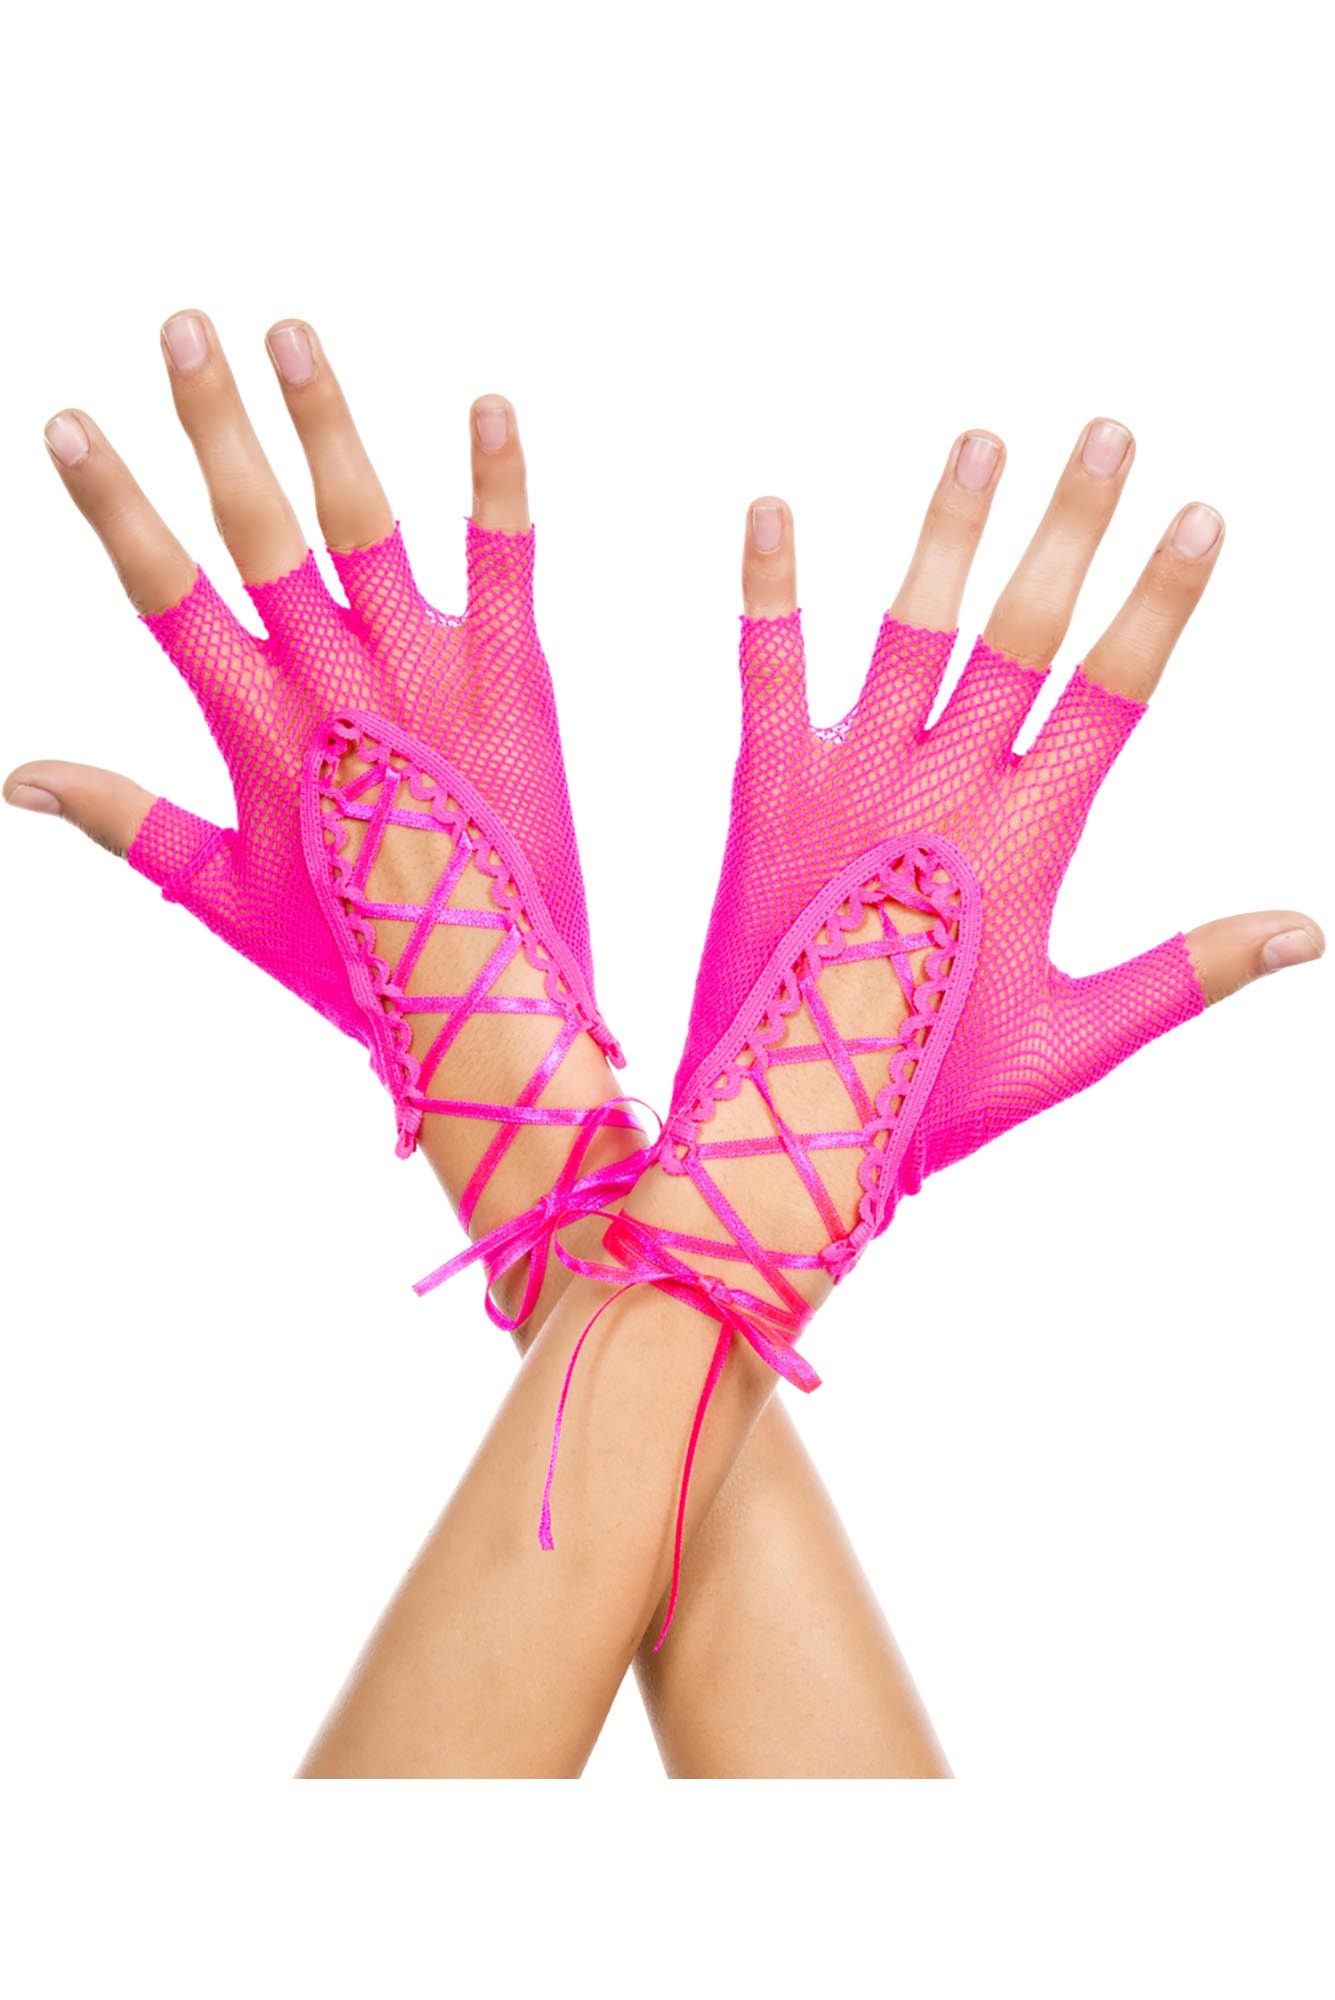 Pink Wrist Length Lace-up Gloves Fishnet Fingerless 0413 Edmonton